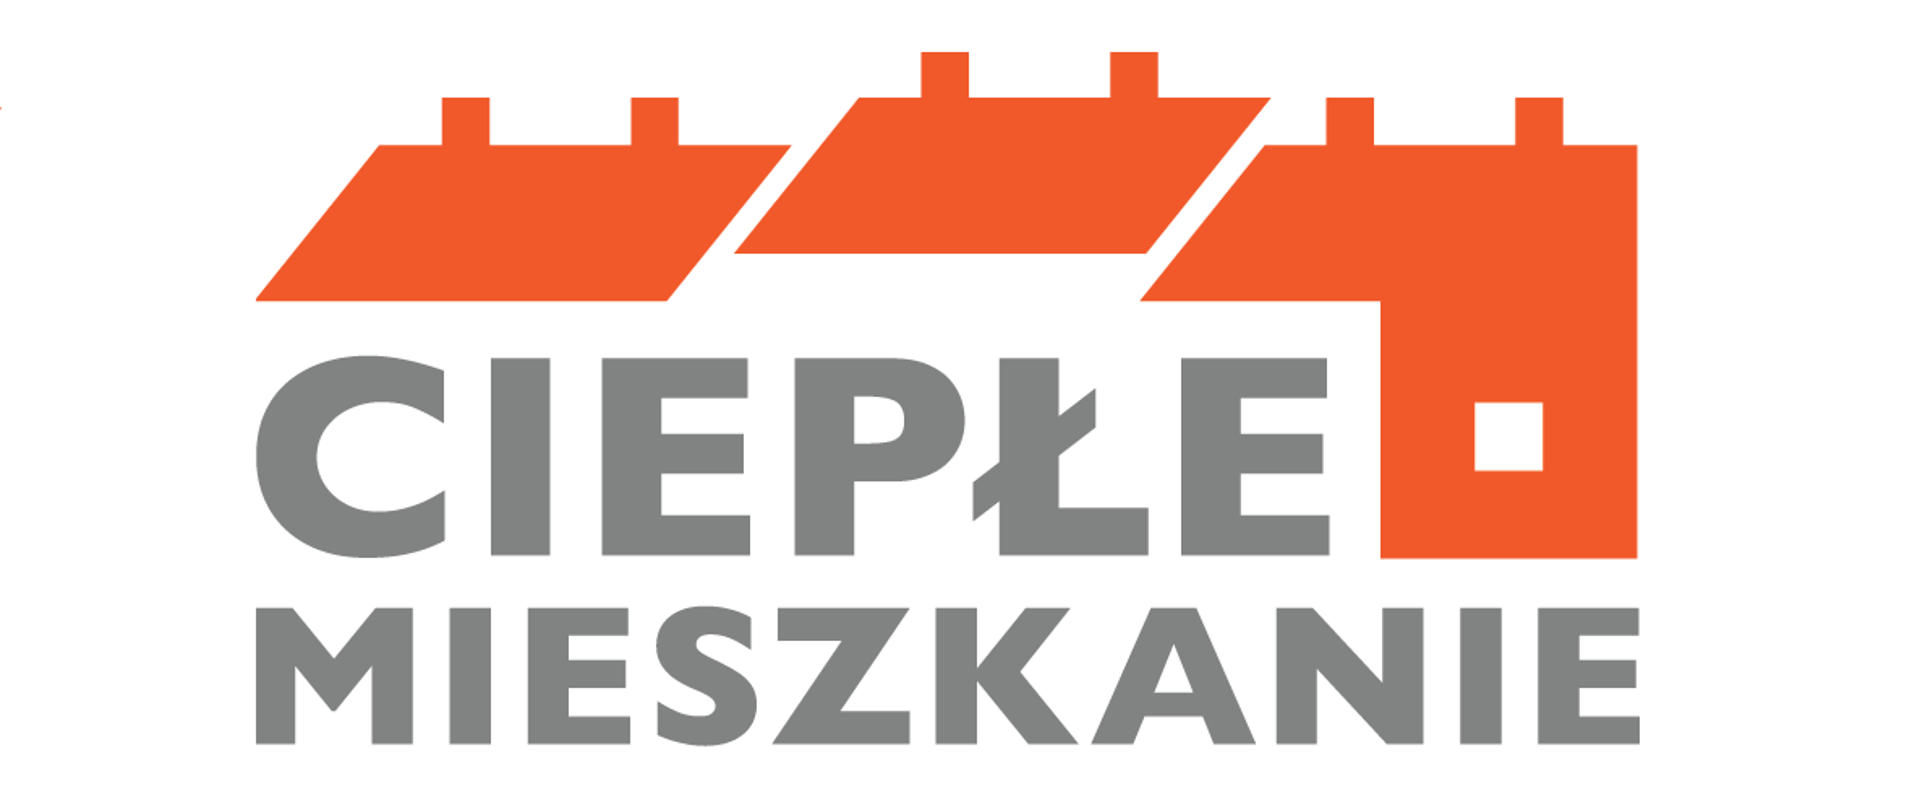 Ciepłe mieszkanie logo programu